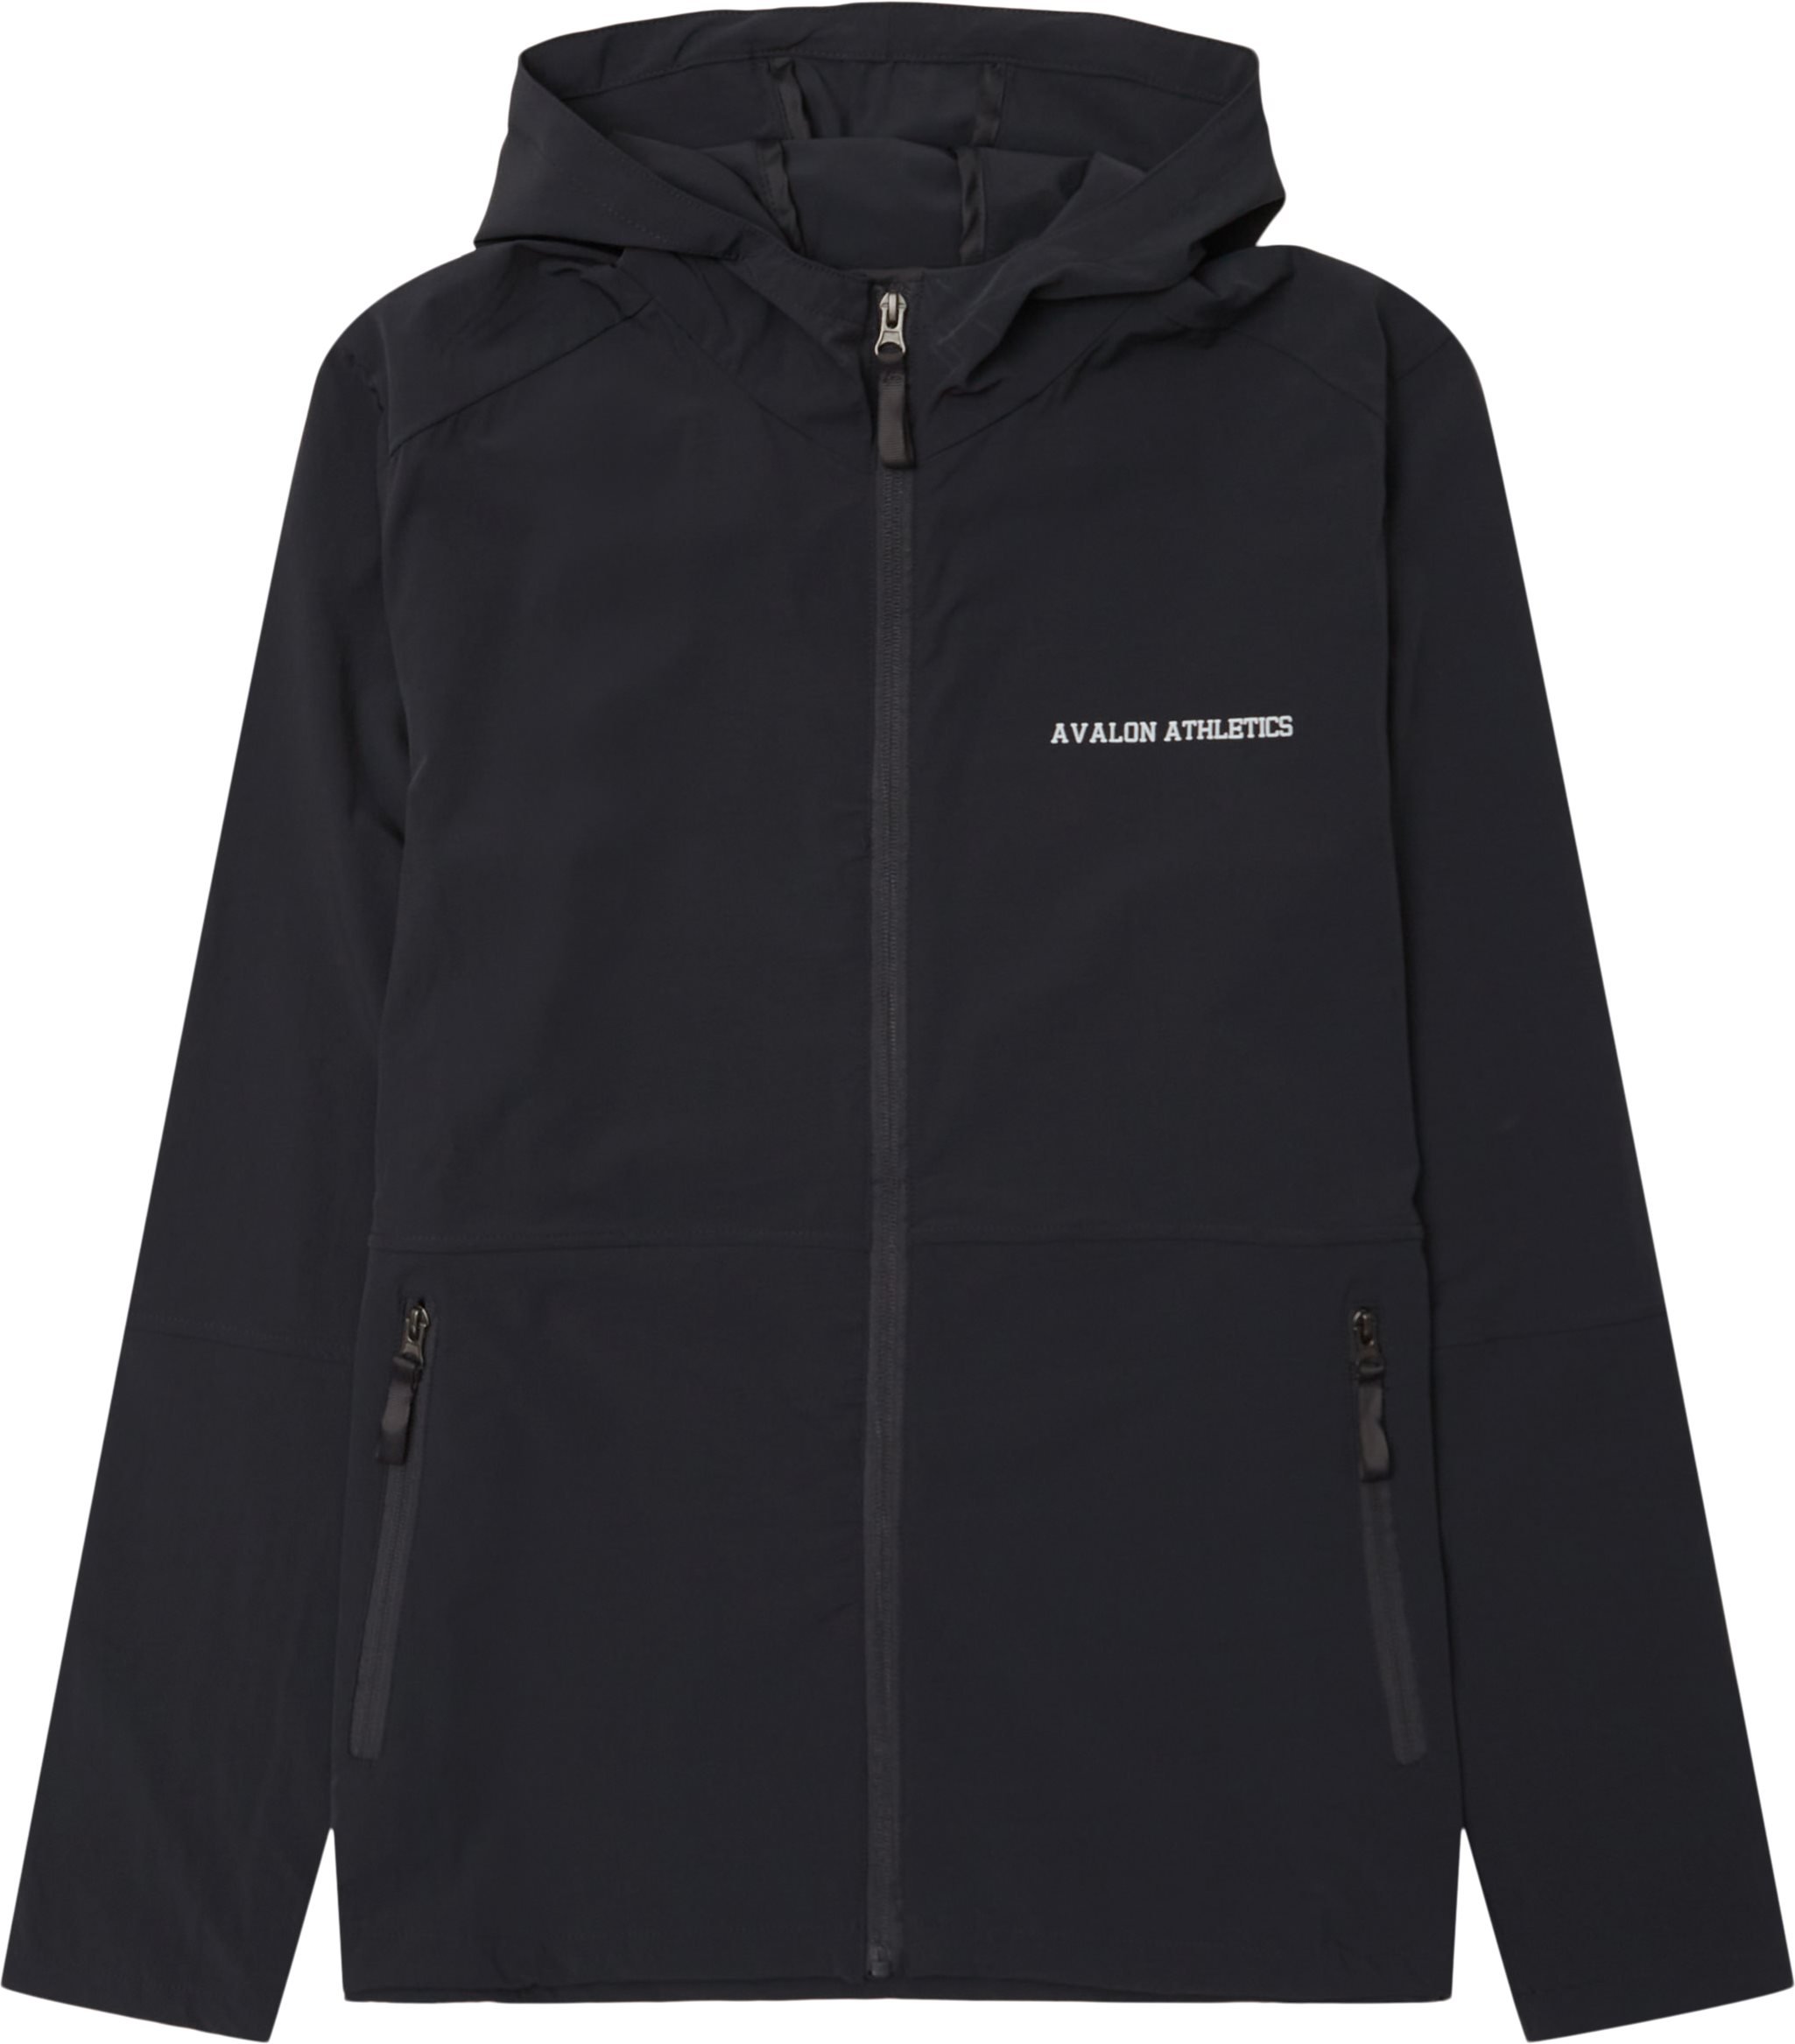 Bayside Jacket - Lightweight jackets - Regular fit - Black